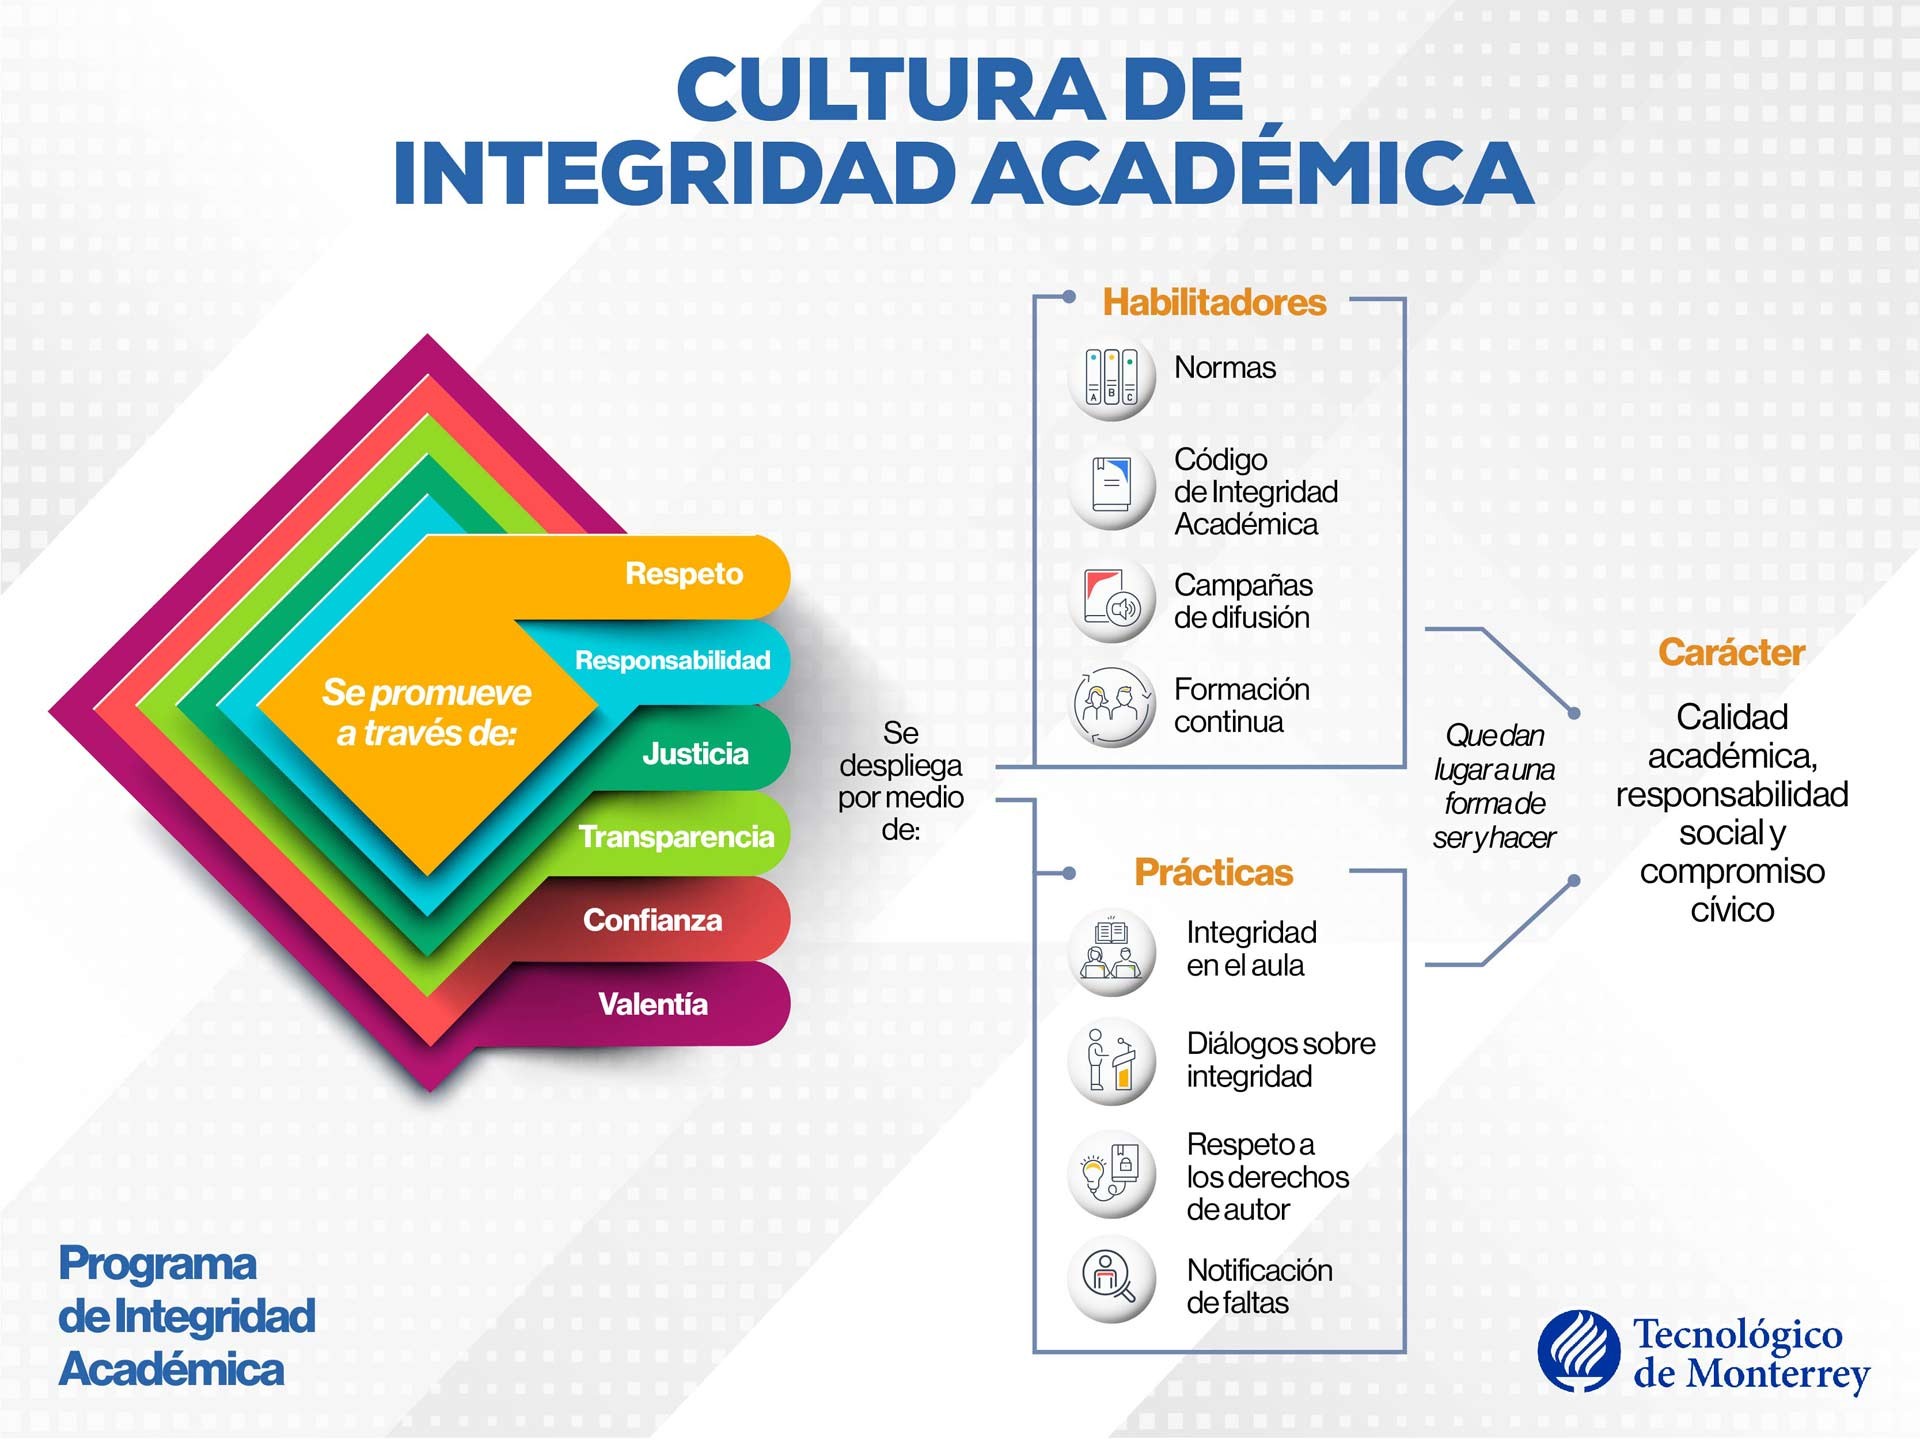 El Tec de Monterrey promueve la cultura de integridad a través de su Modelo de Integridad Académica